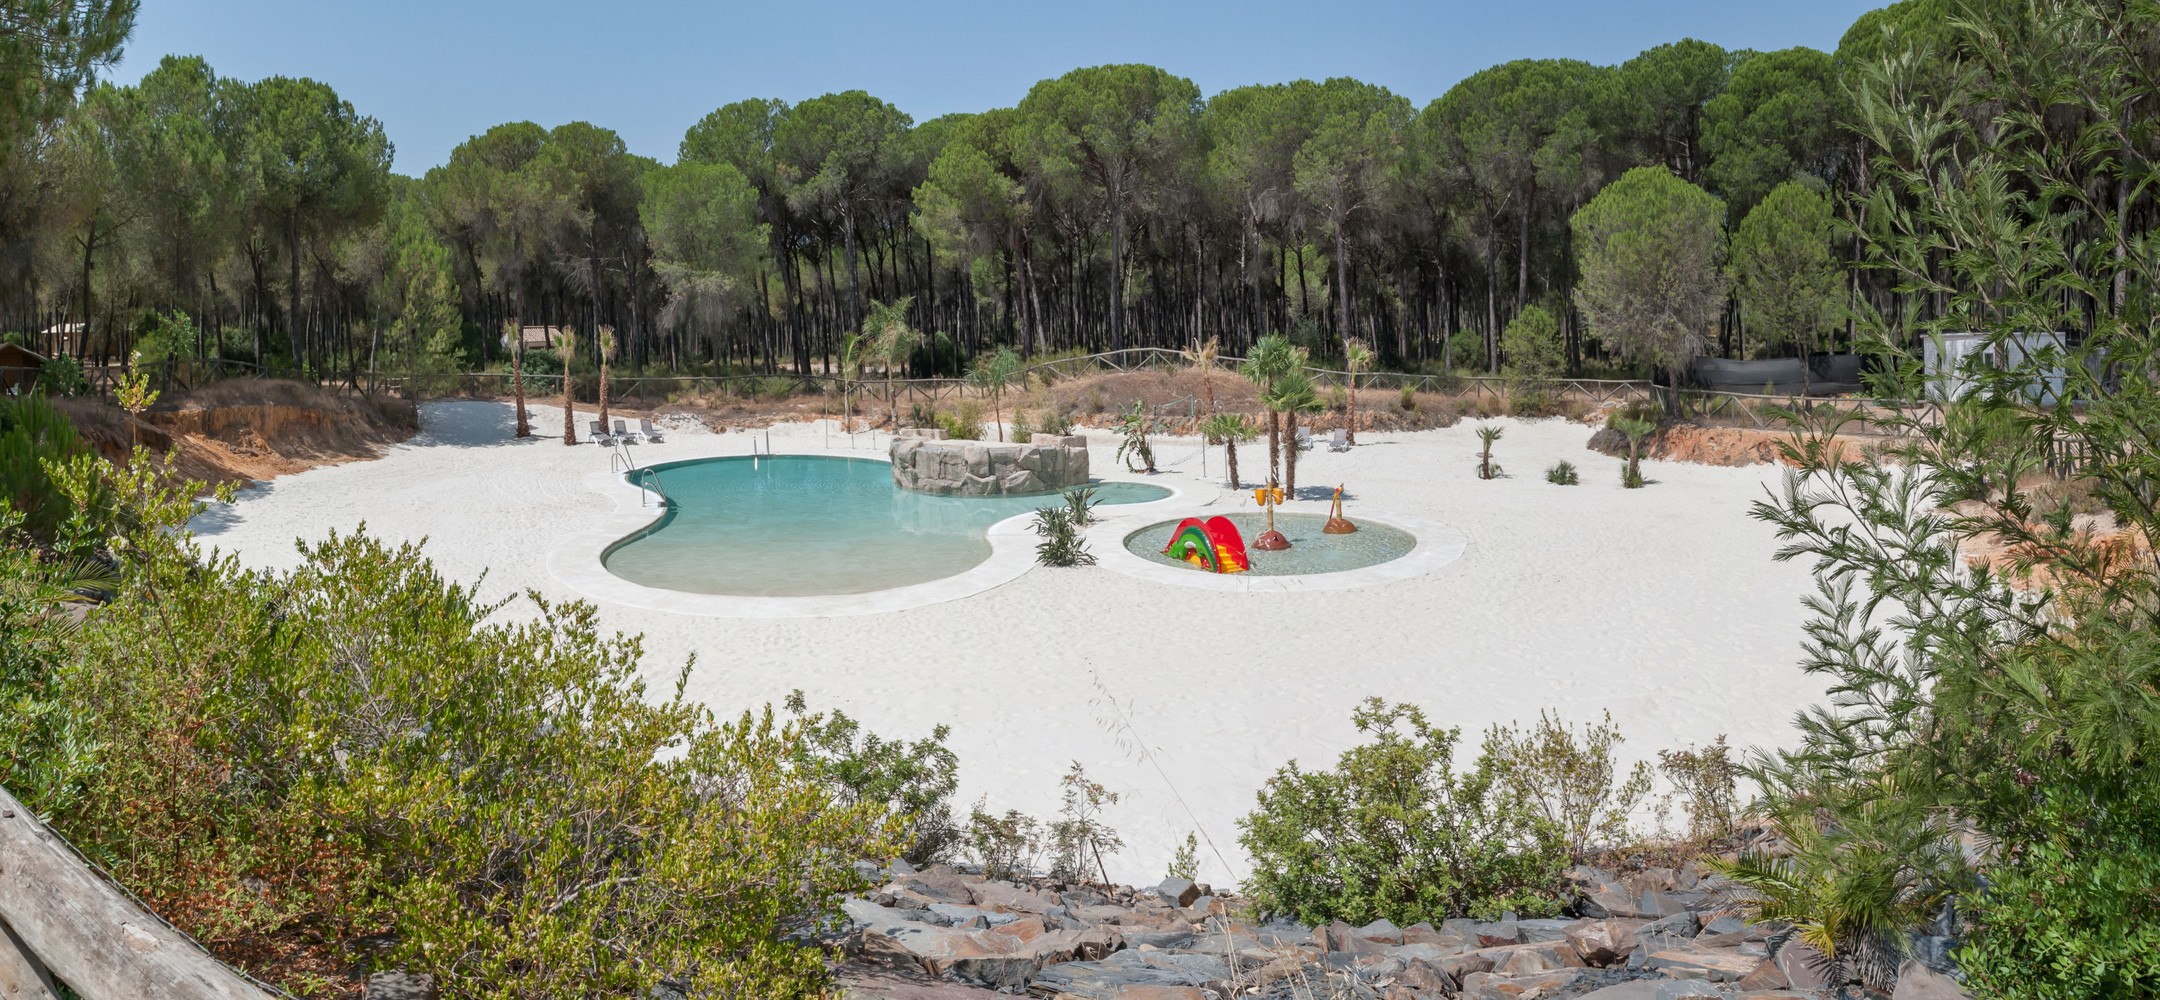 Huttopia Campsite Parque de Doñana